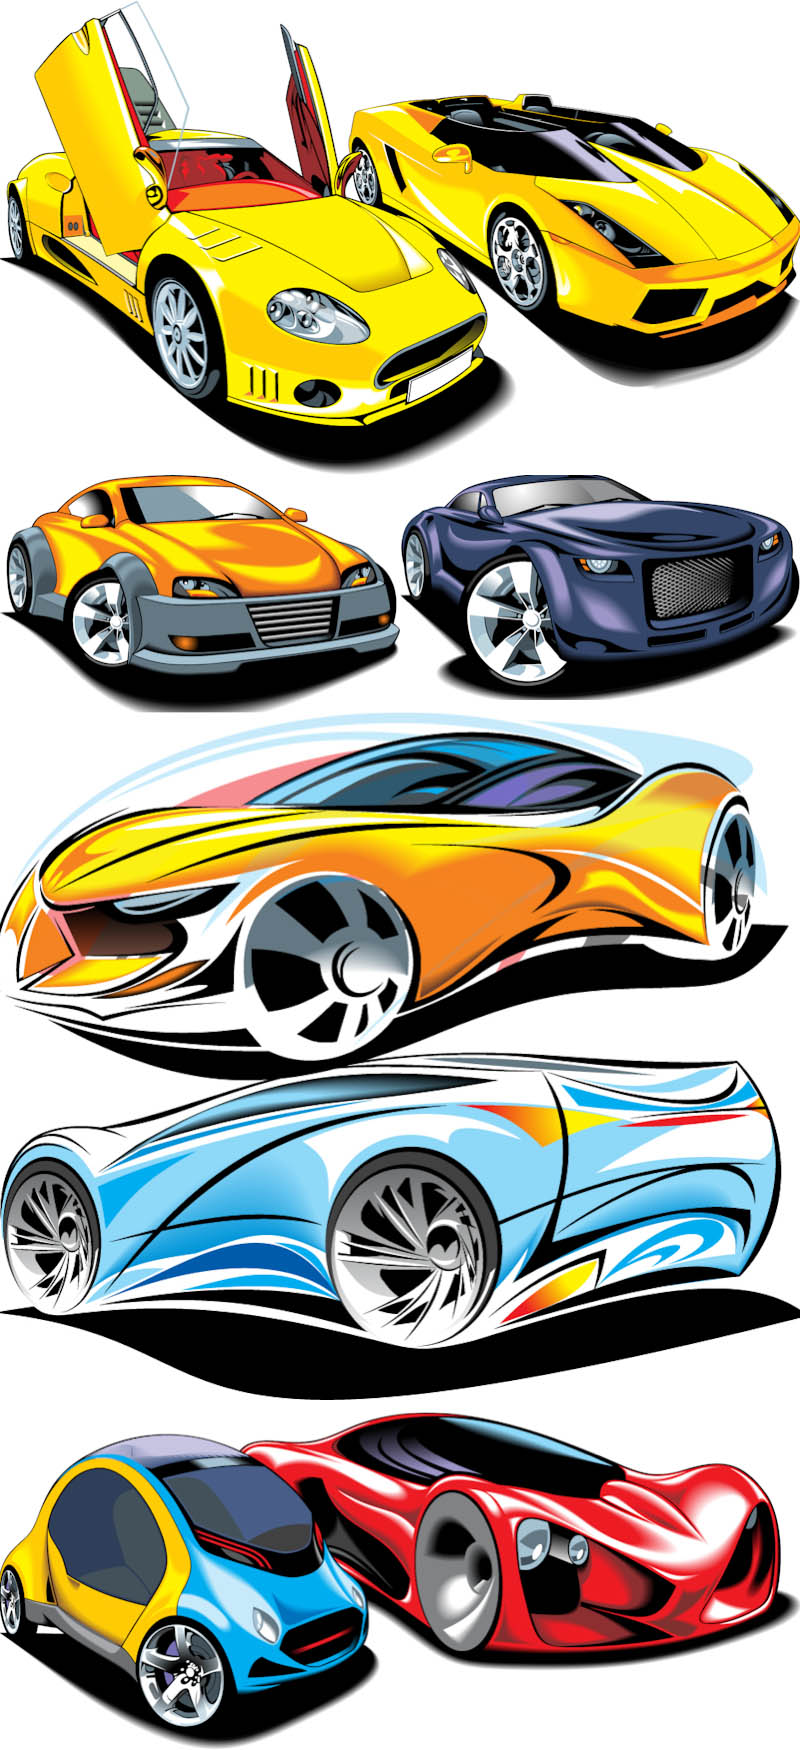 vehicles | Free Stock Vector Art & Illustrations, EPS, AI, SVG ...